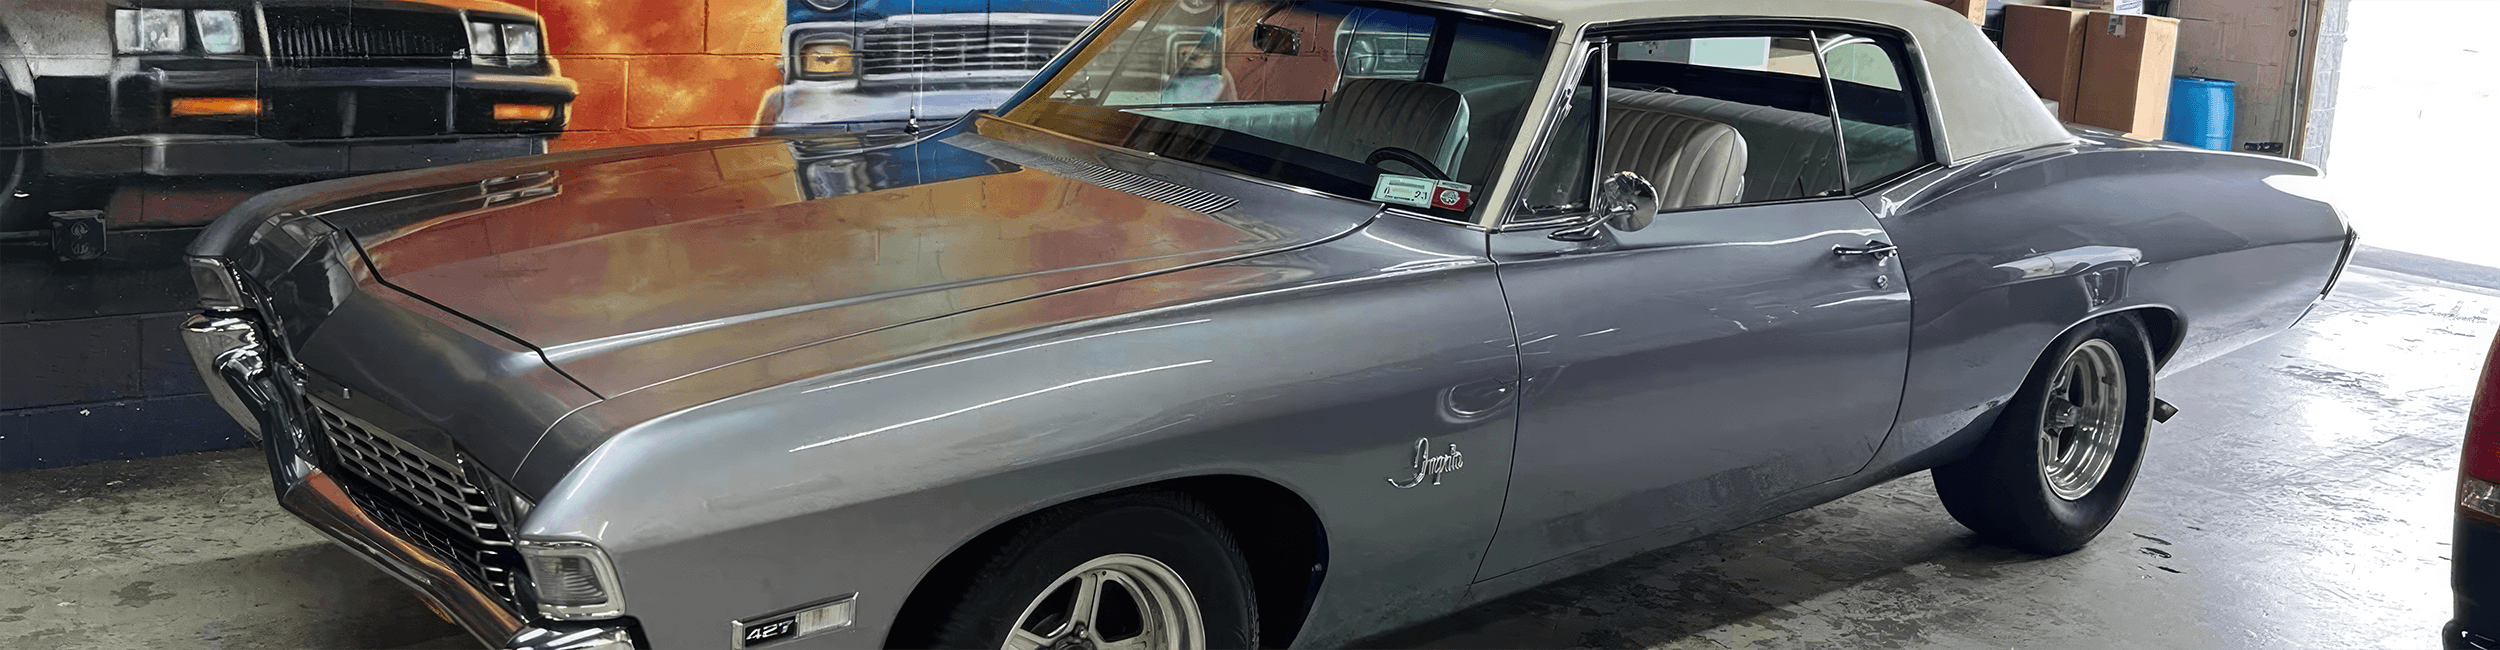 1968 Impala powered by a BluePrint Engines' 540 c.i.